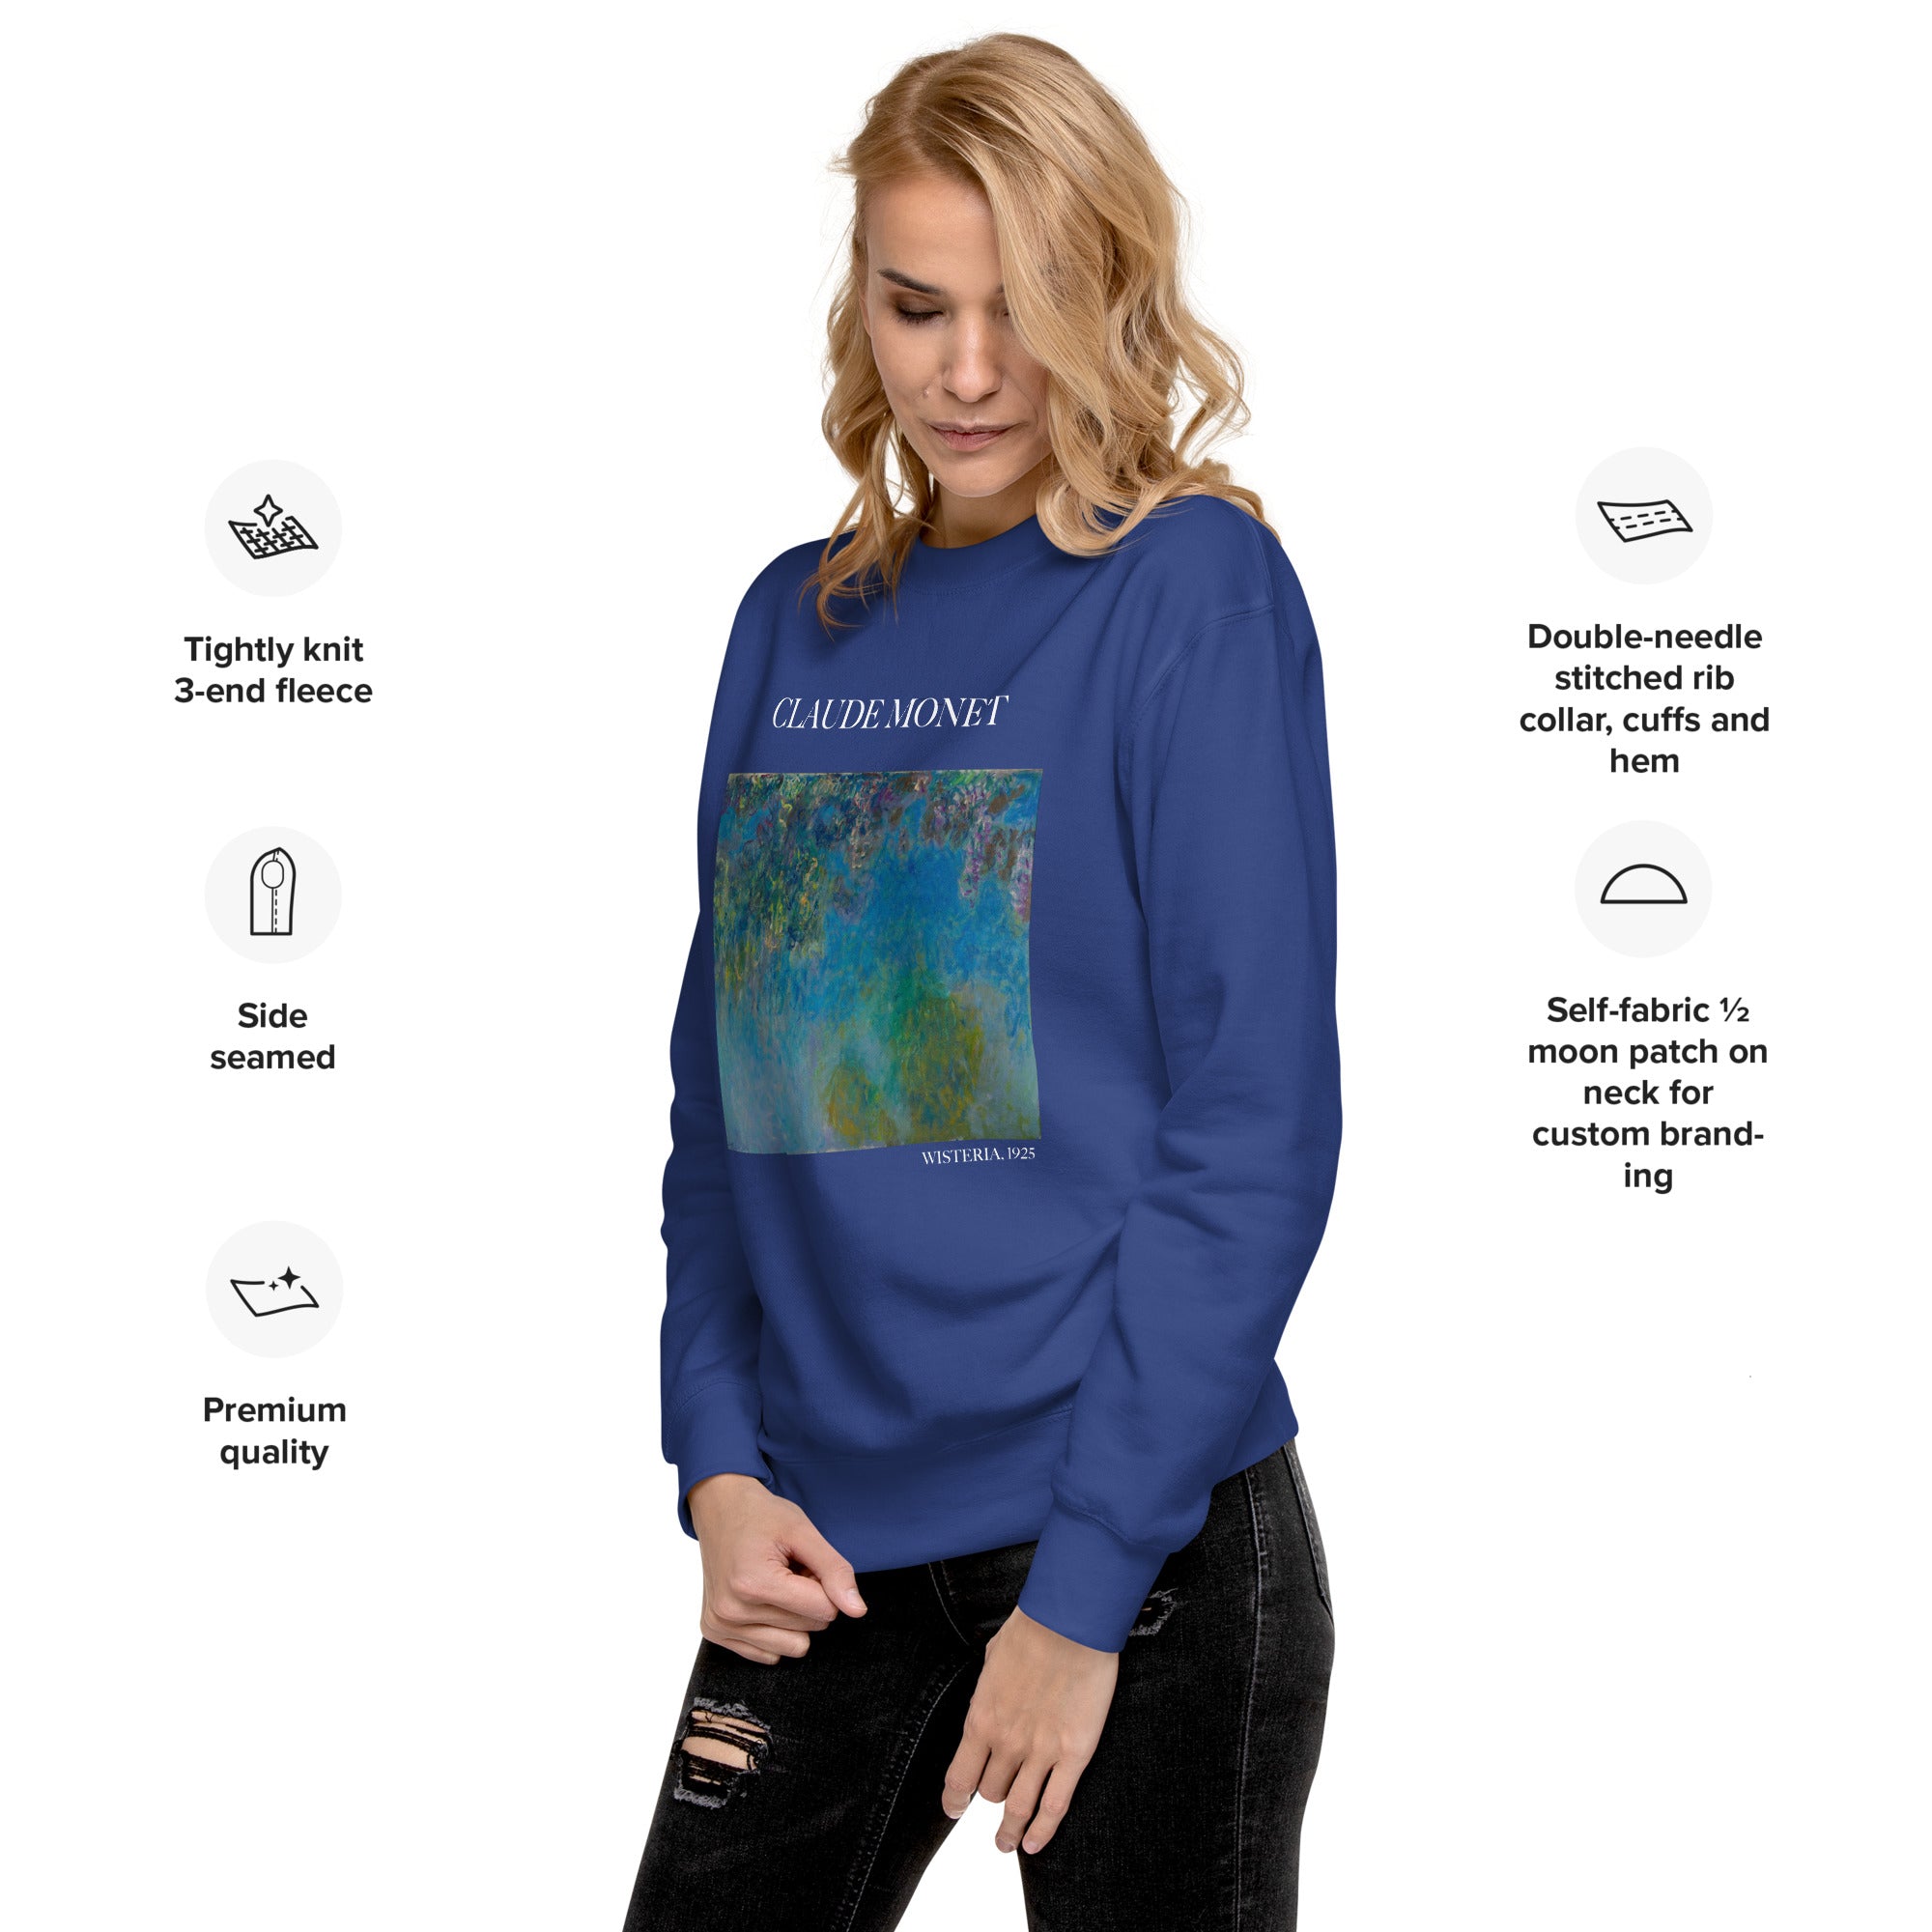 Claude Monet 'Wisteria' Famous Painting Sweatshirt | Unisex Premium Sweatshirt